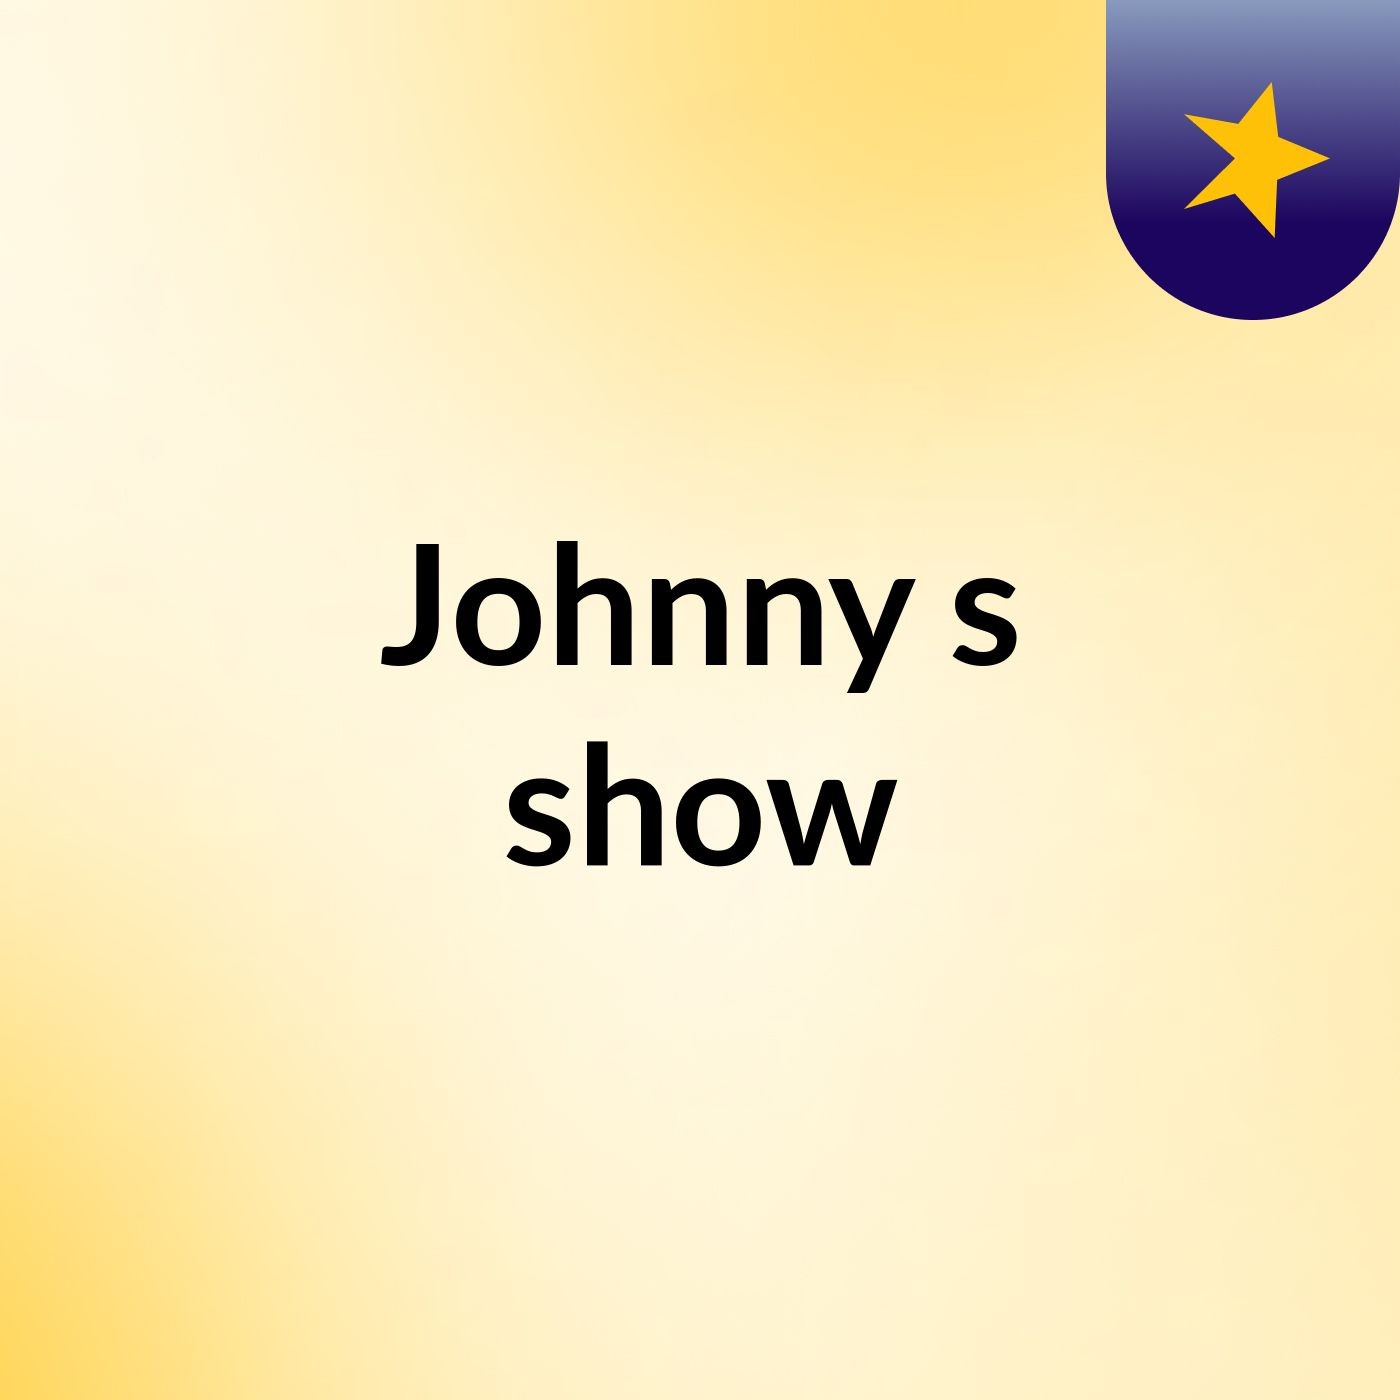 Johnny's show